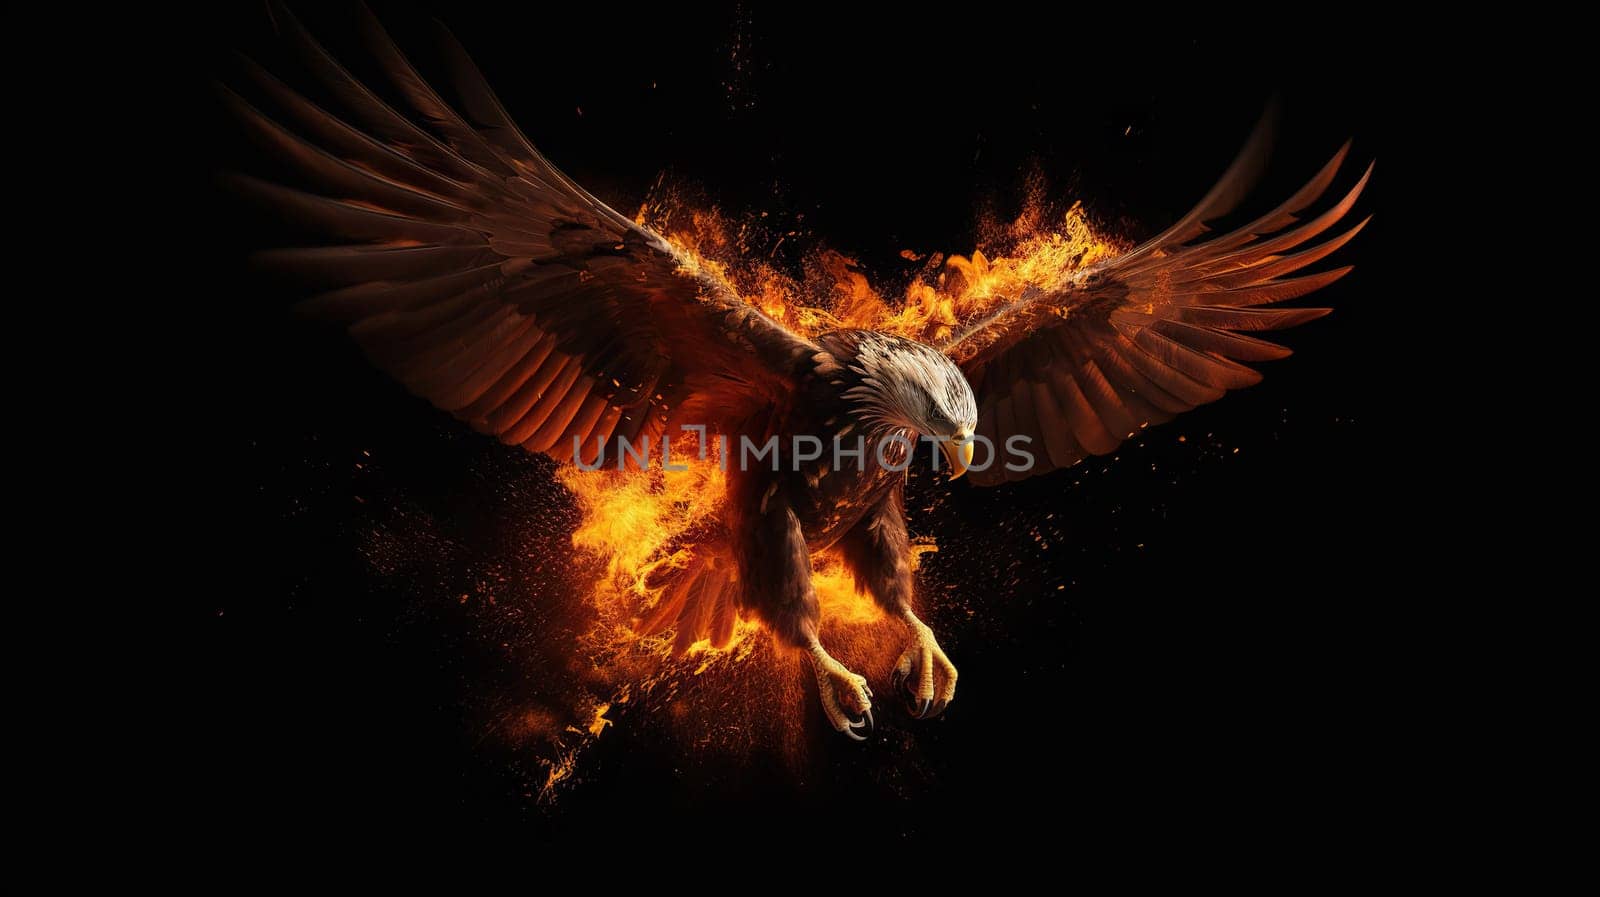 Majestic eagle in fiery phoenix transformation against dark background - Generative AI